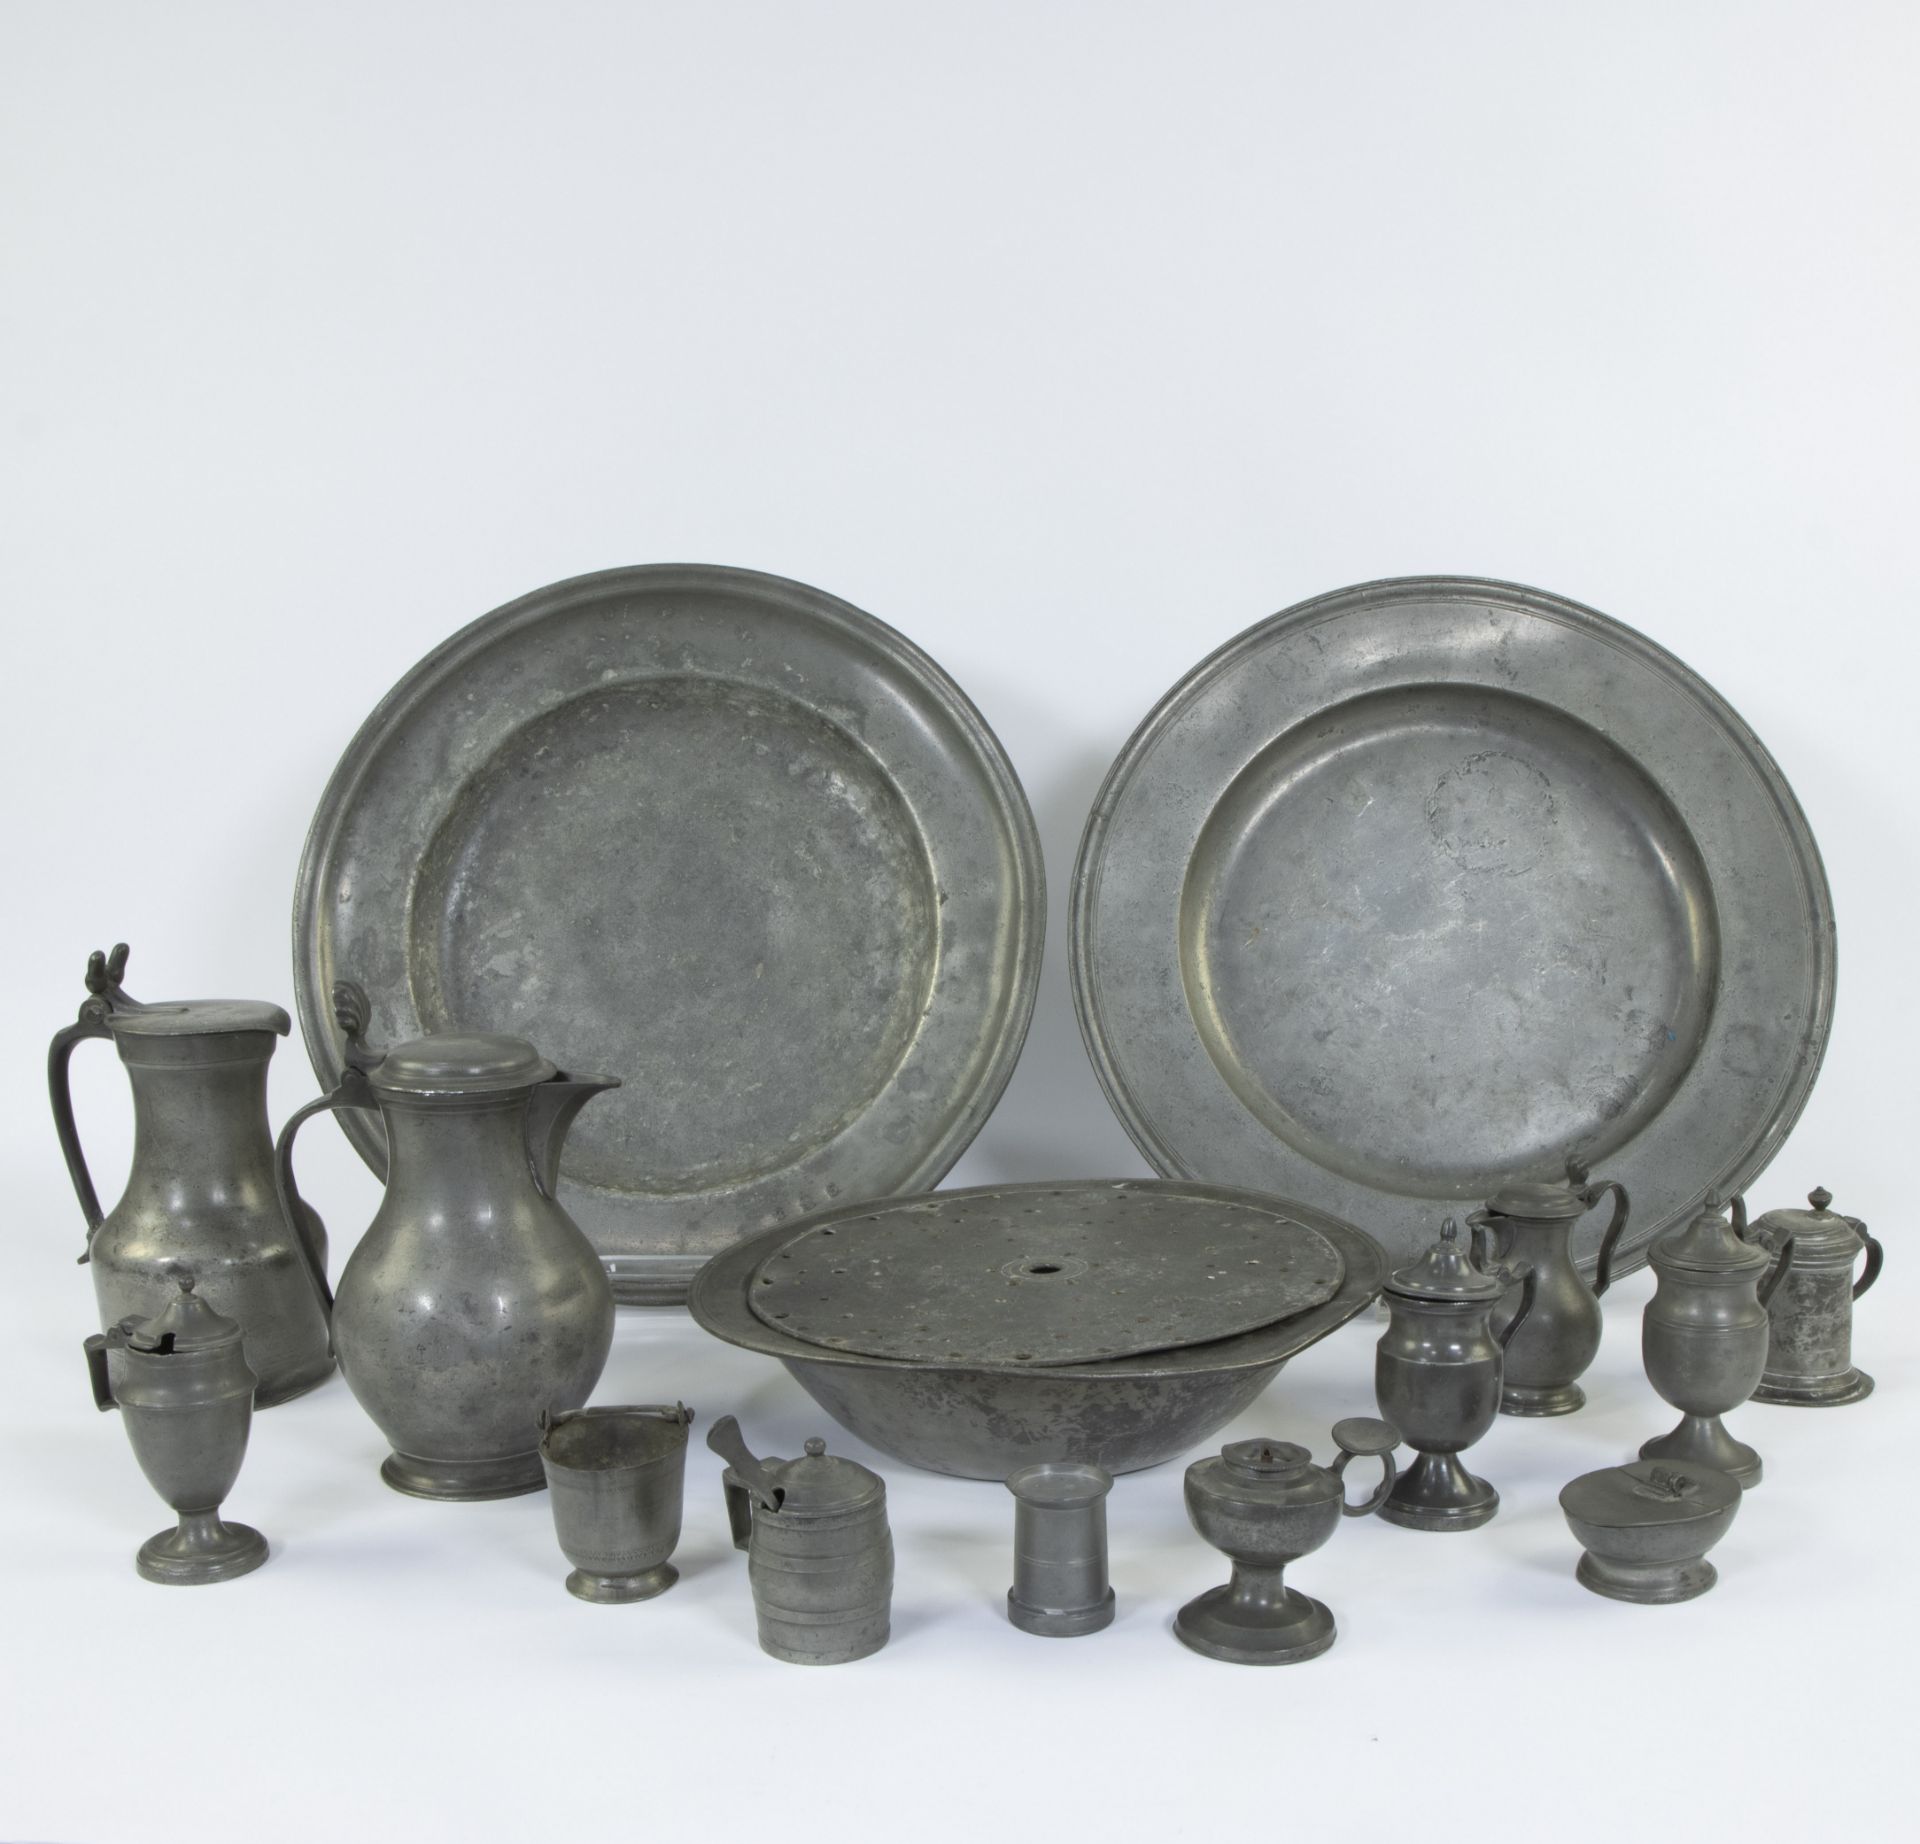 Collection of old pewter, plates, jugs mustard vessel, vinegar jars